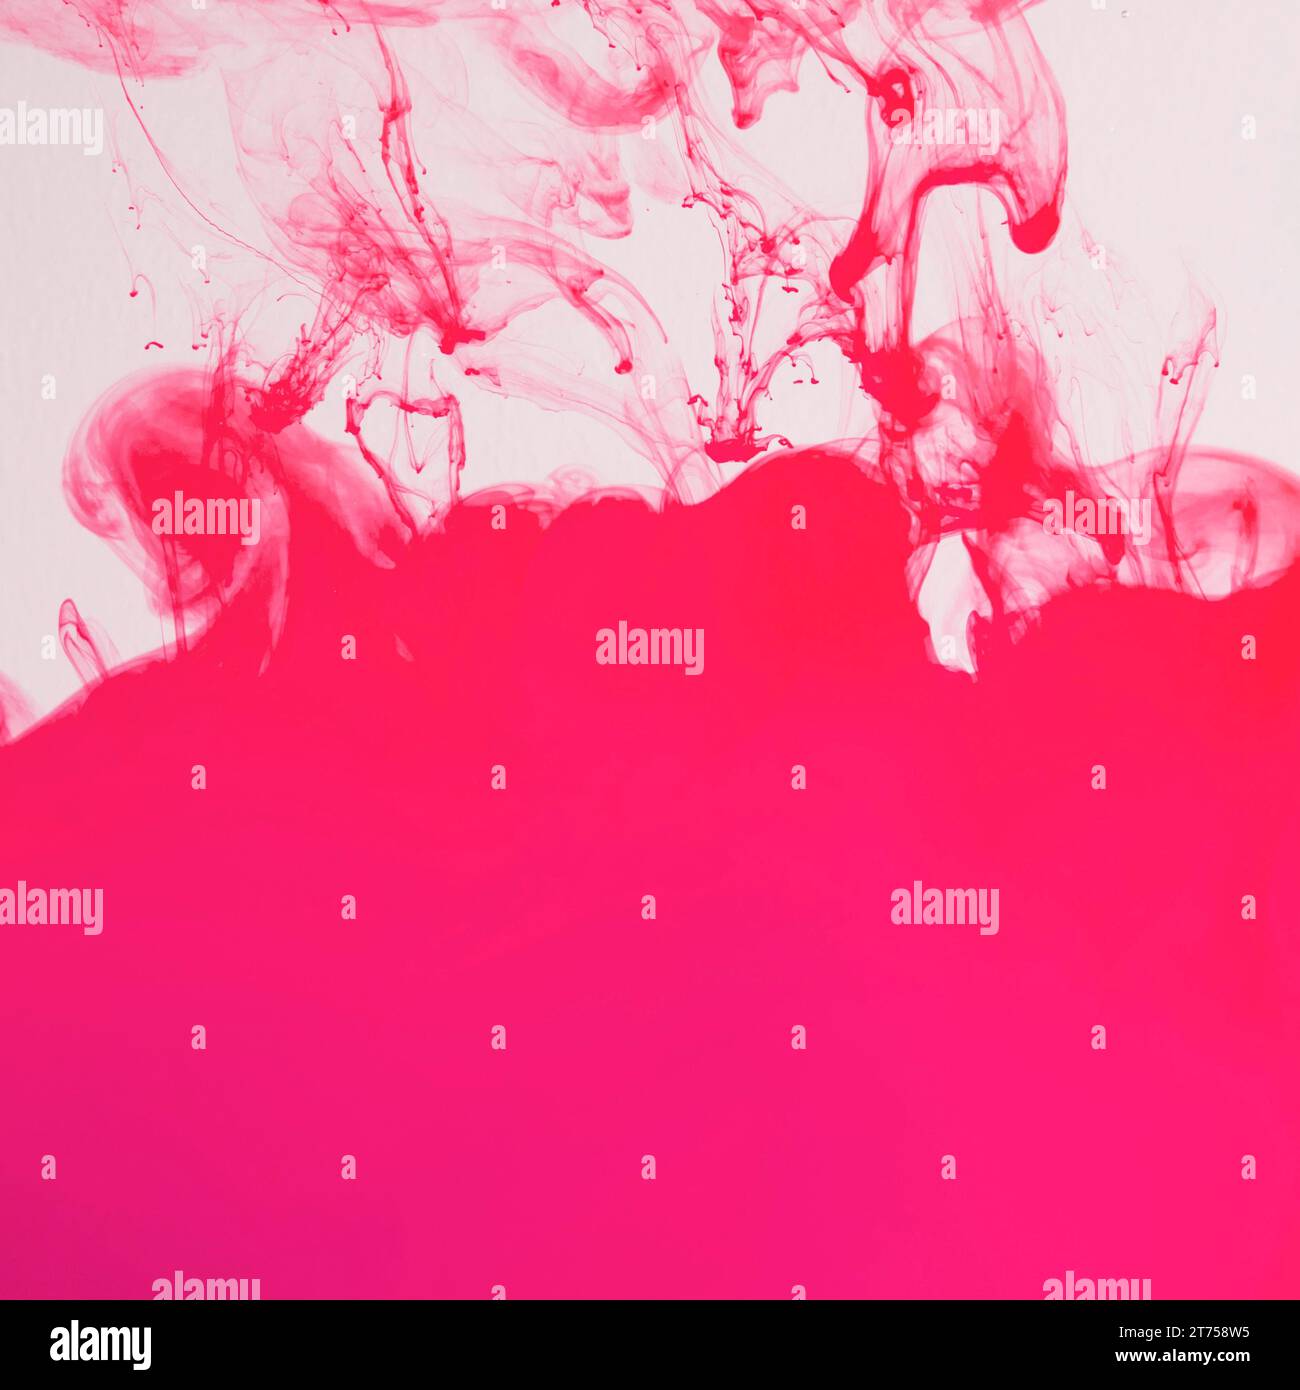 Artistic dense pink cloud underwater Stock Photo